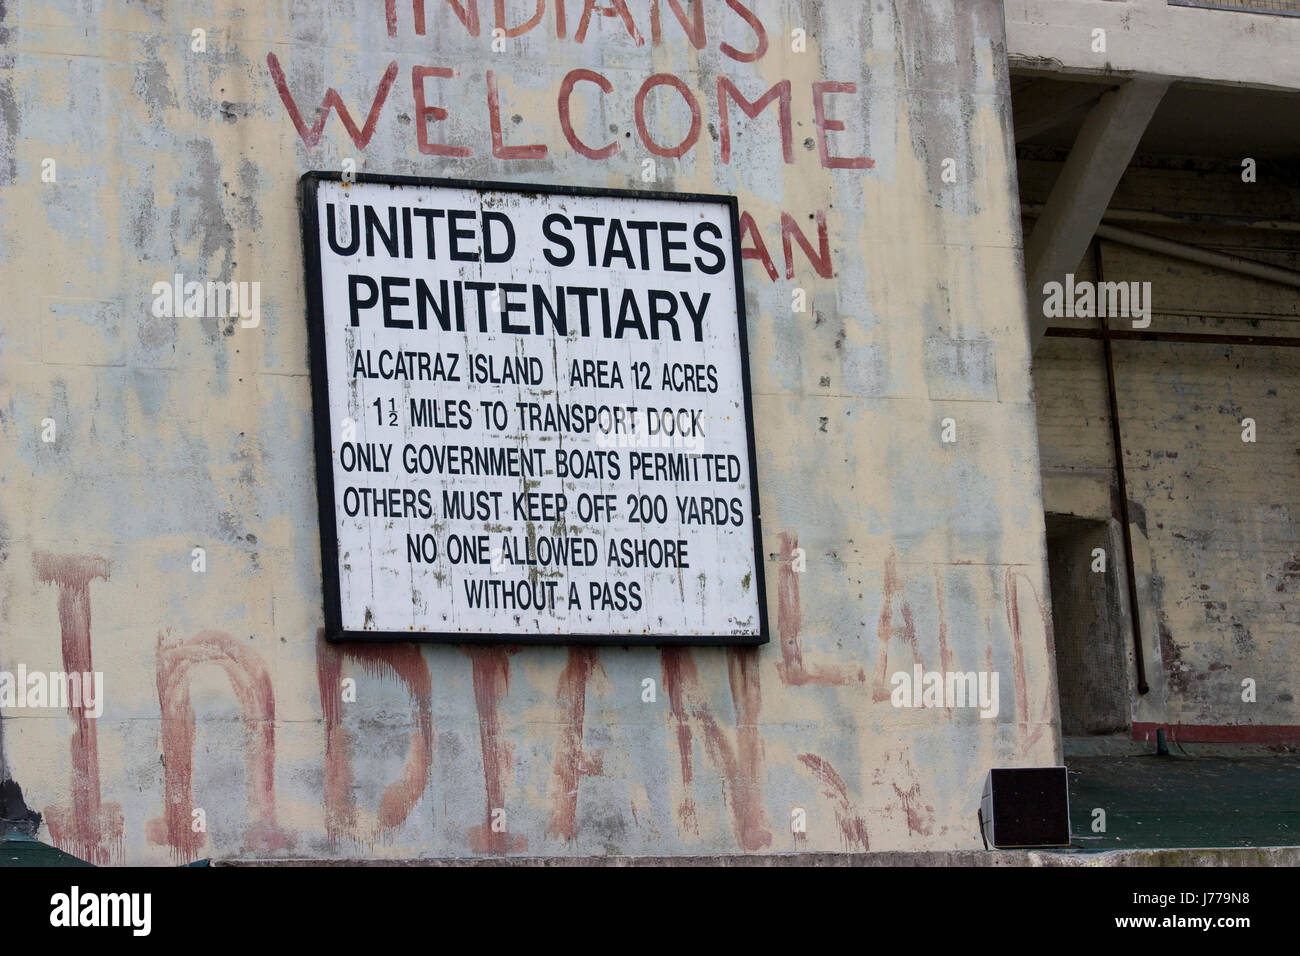 prison inmate indians hand hands bridge chain california america brig jail cell Stock Photo